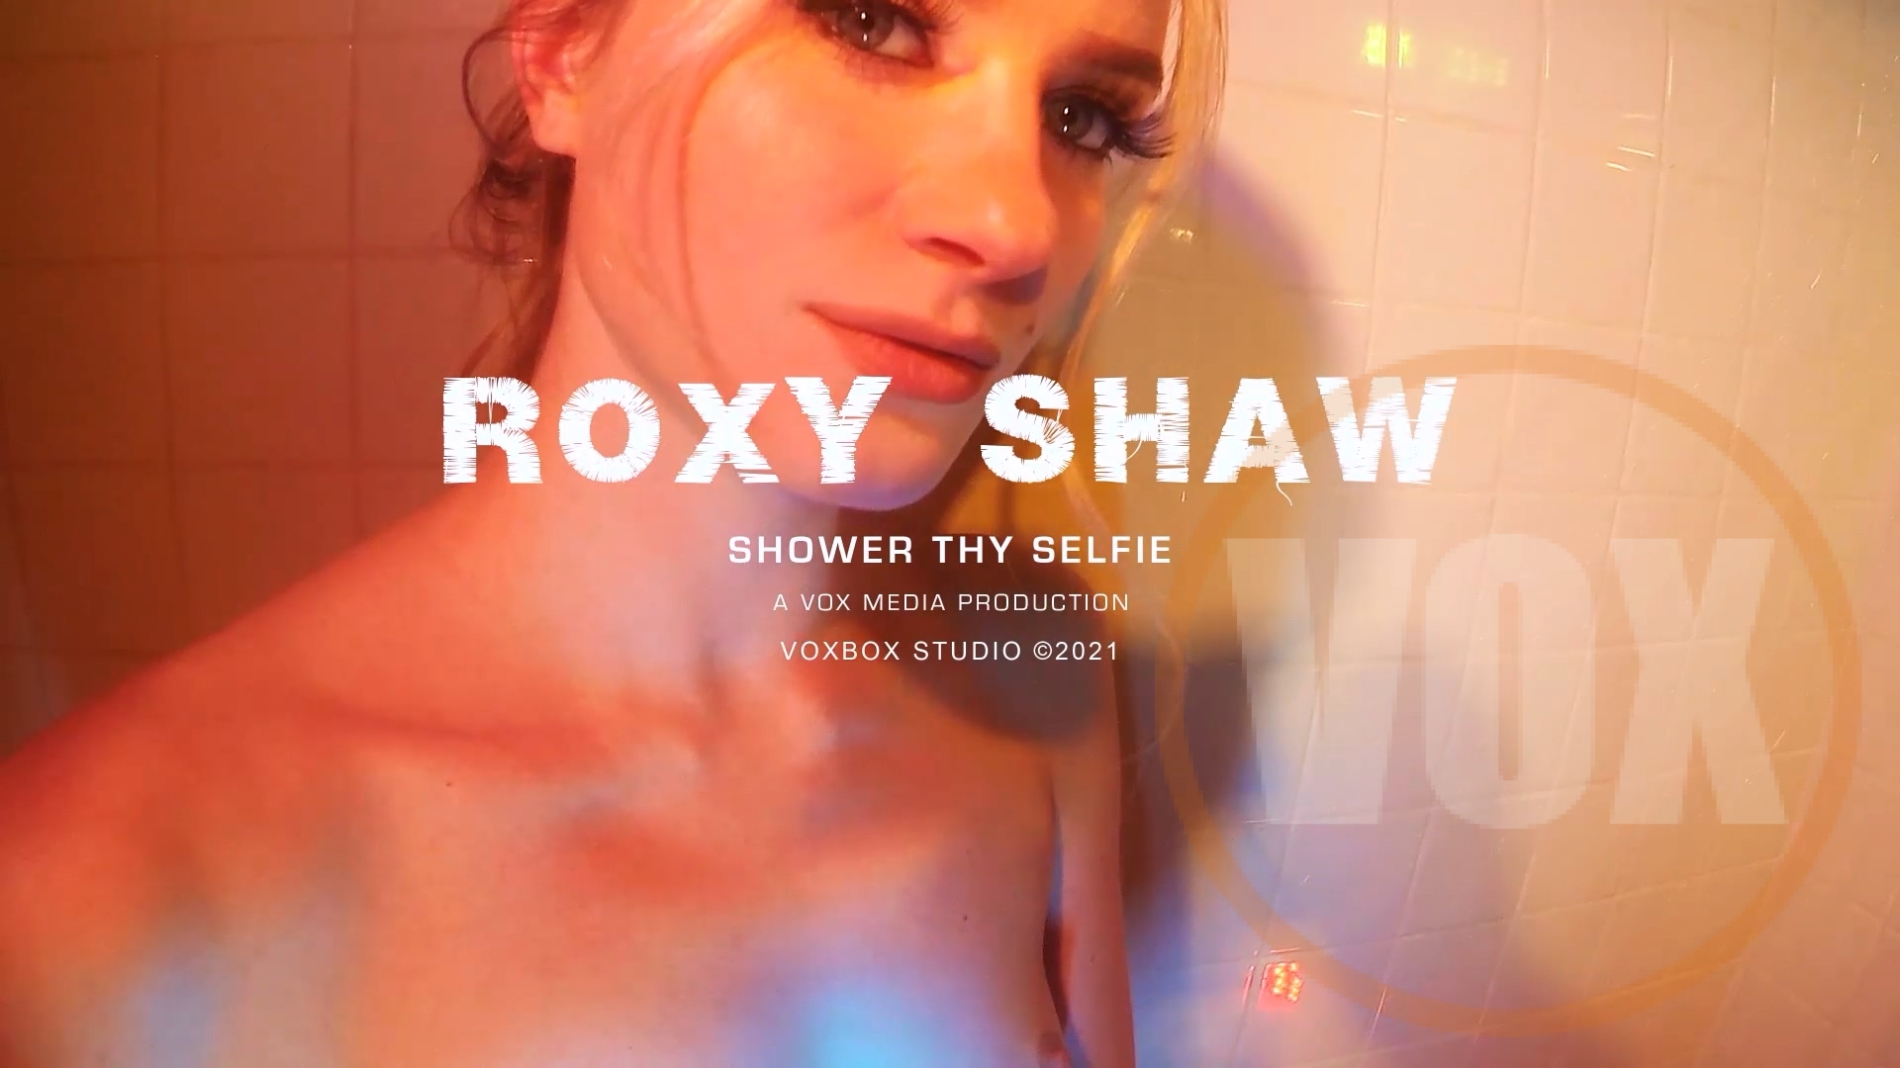 ROXY SHAW MOVIE POSTER